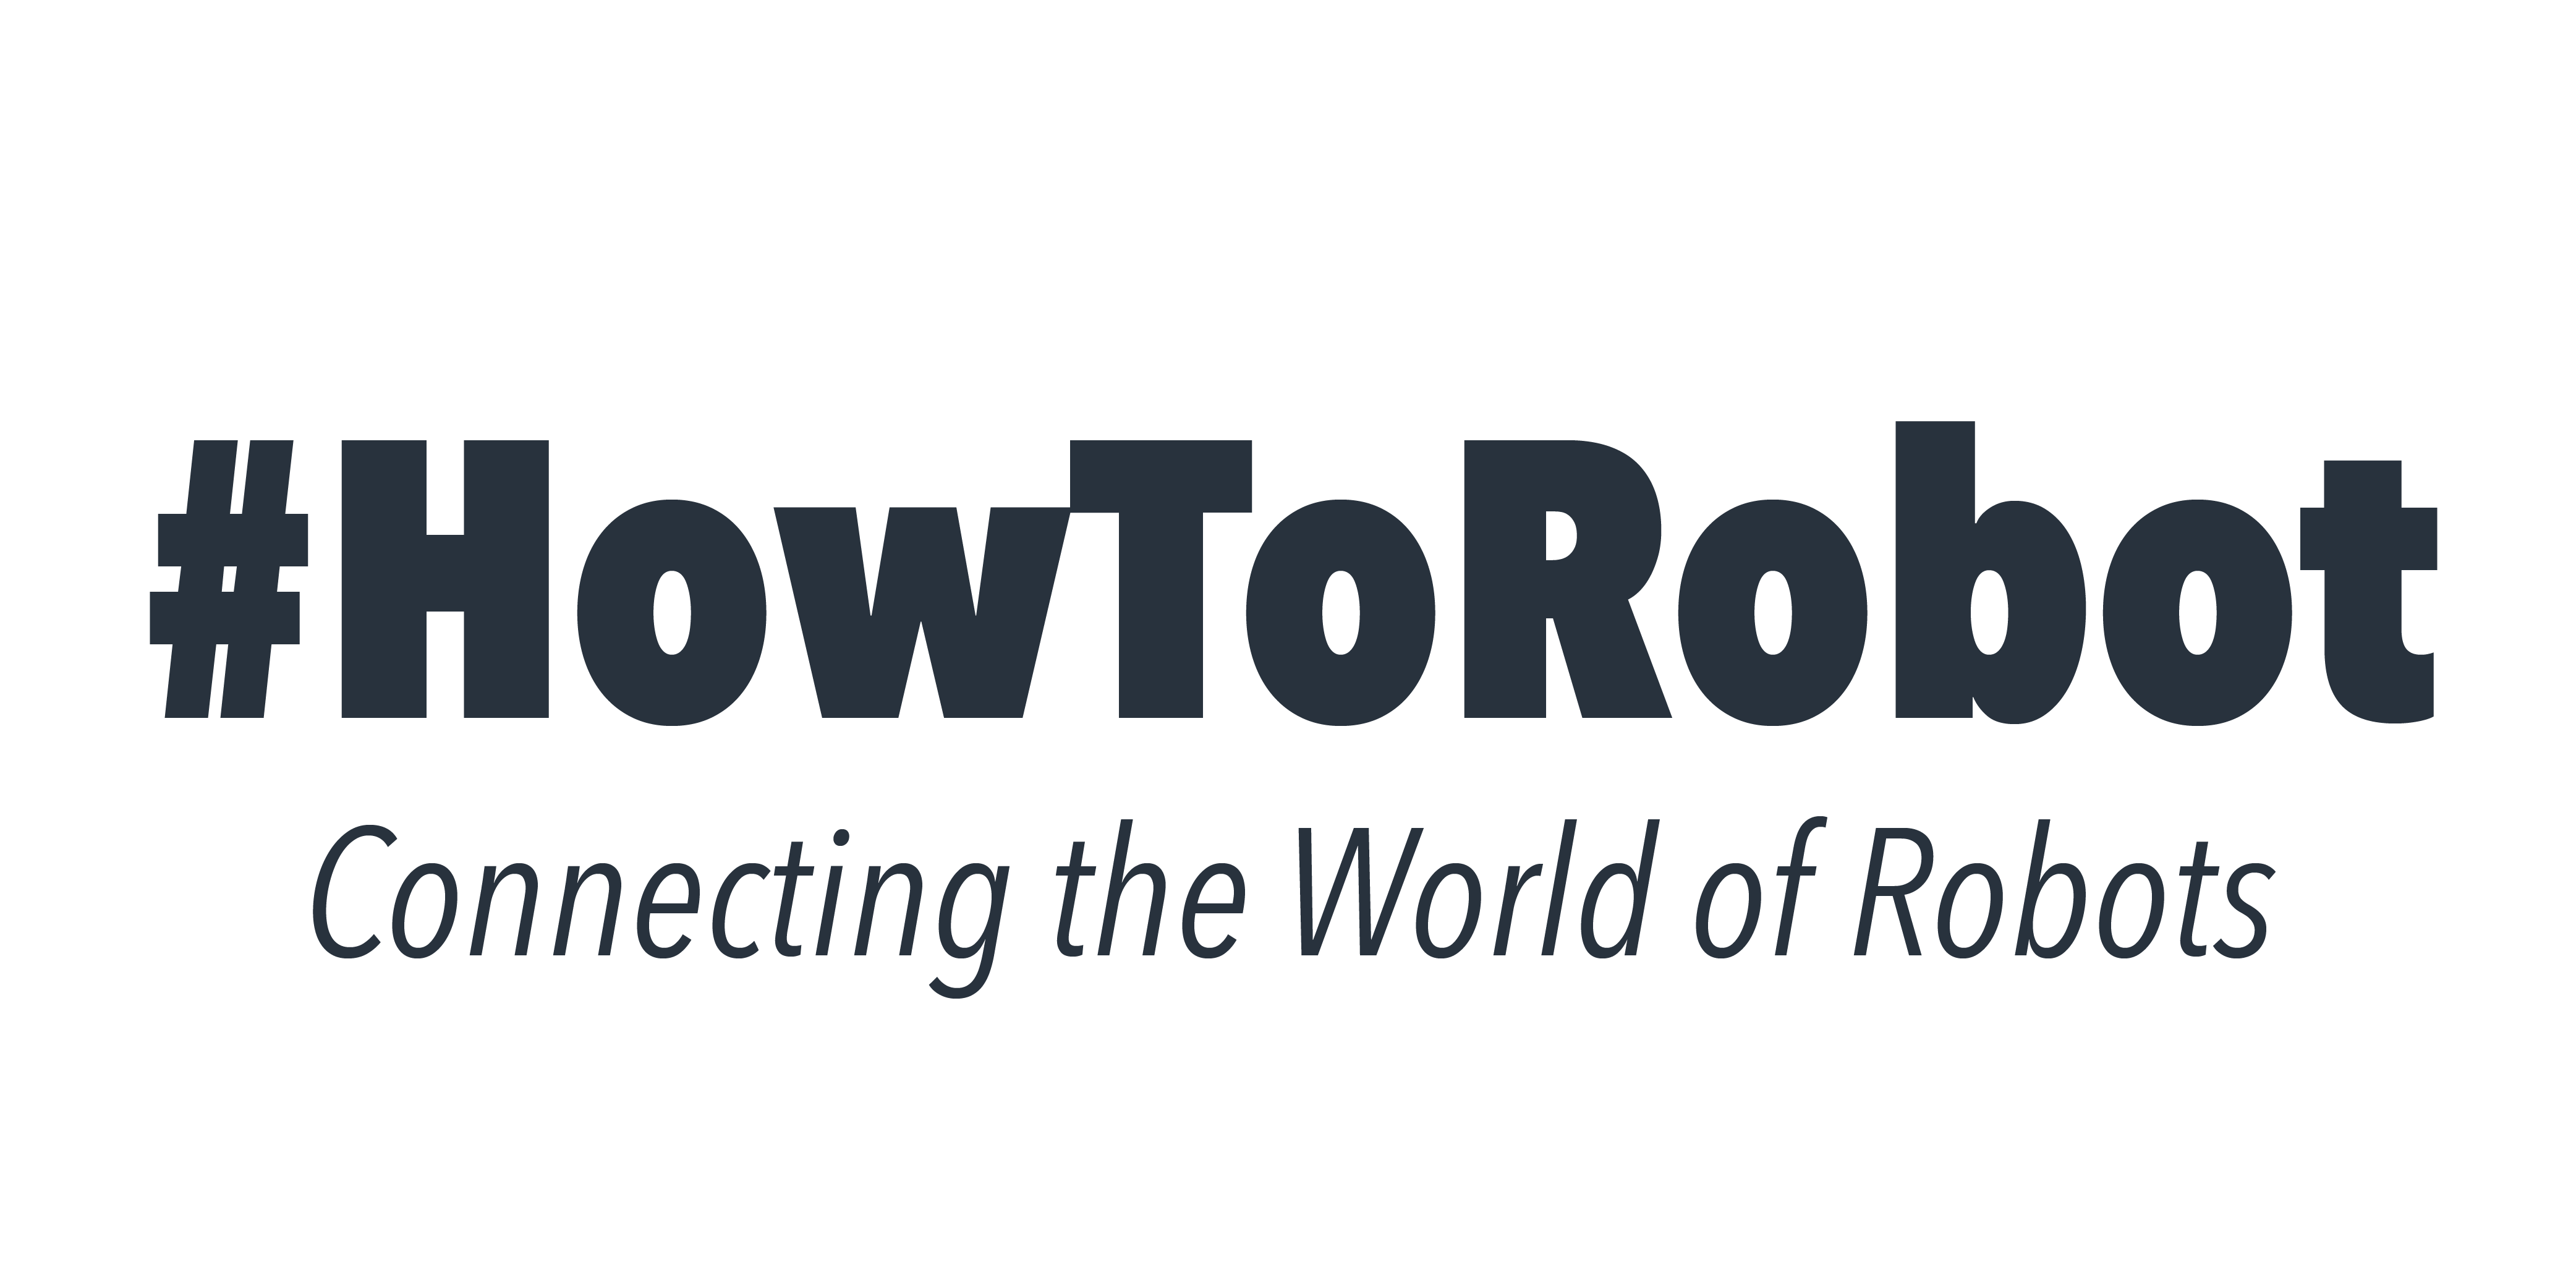 HowToRobot Logo